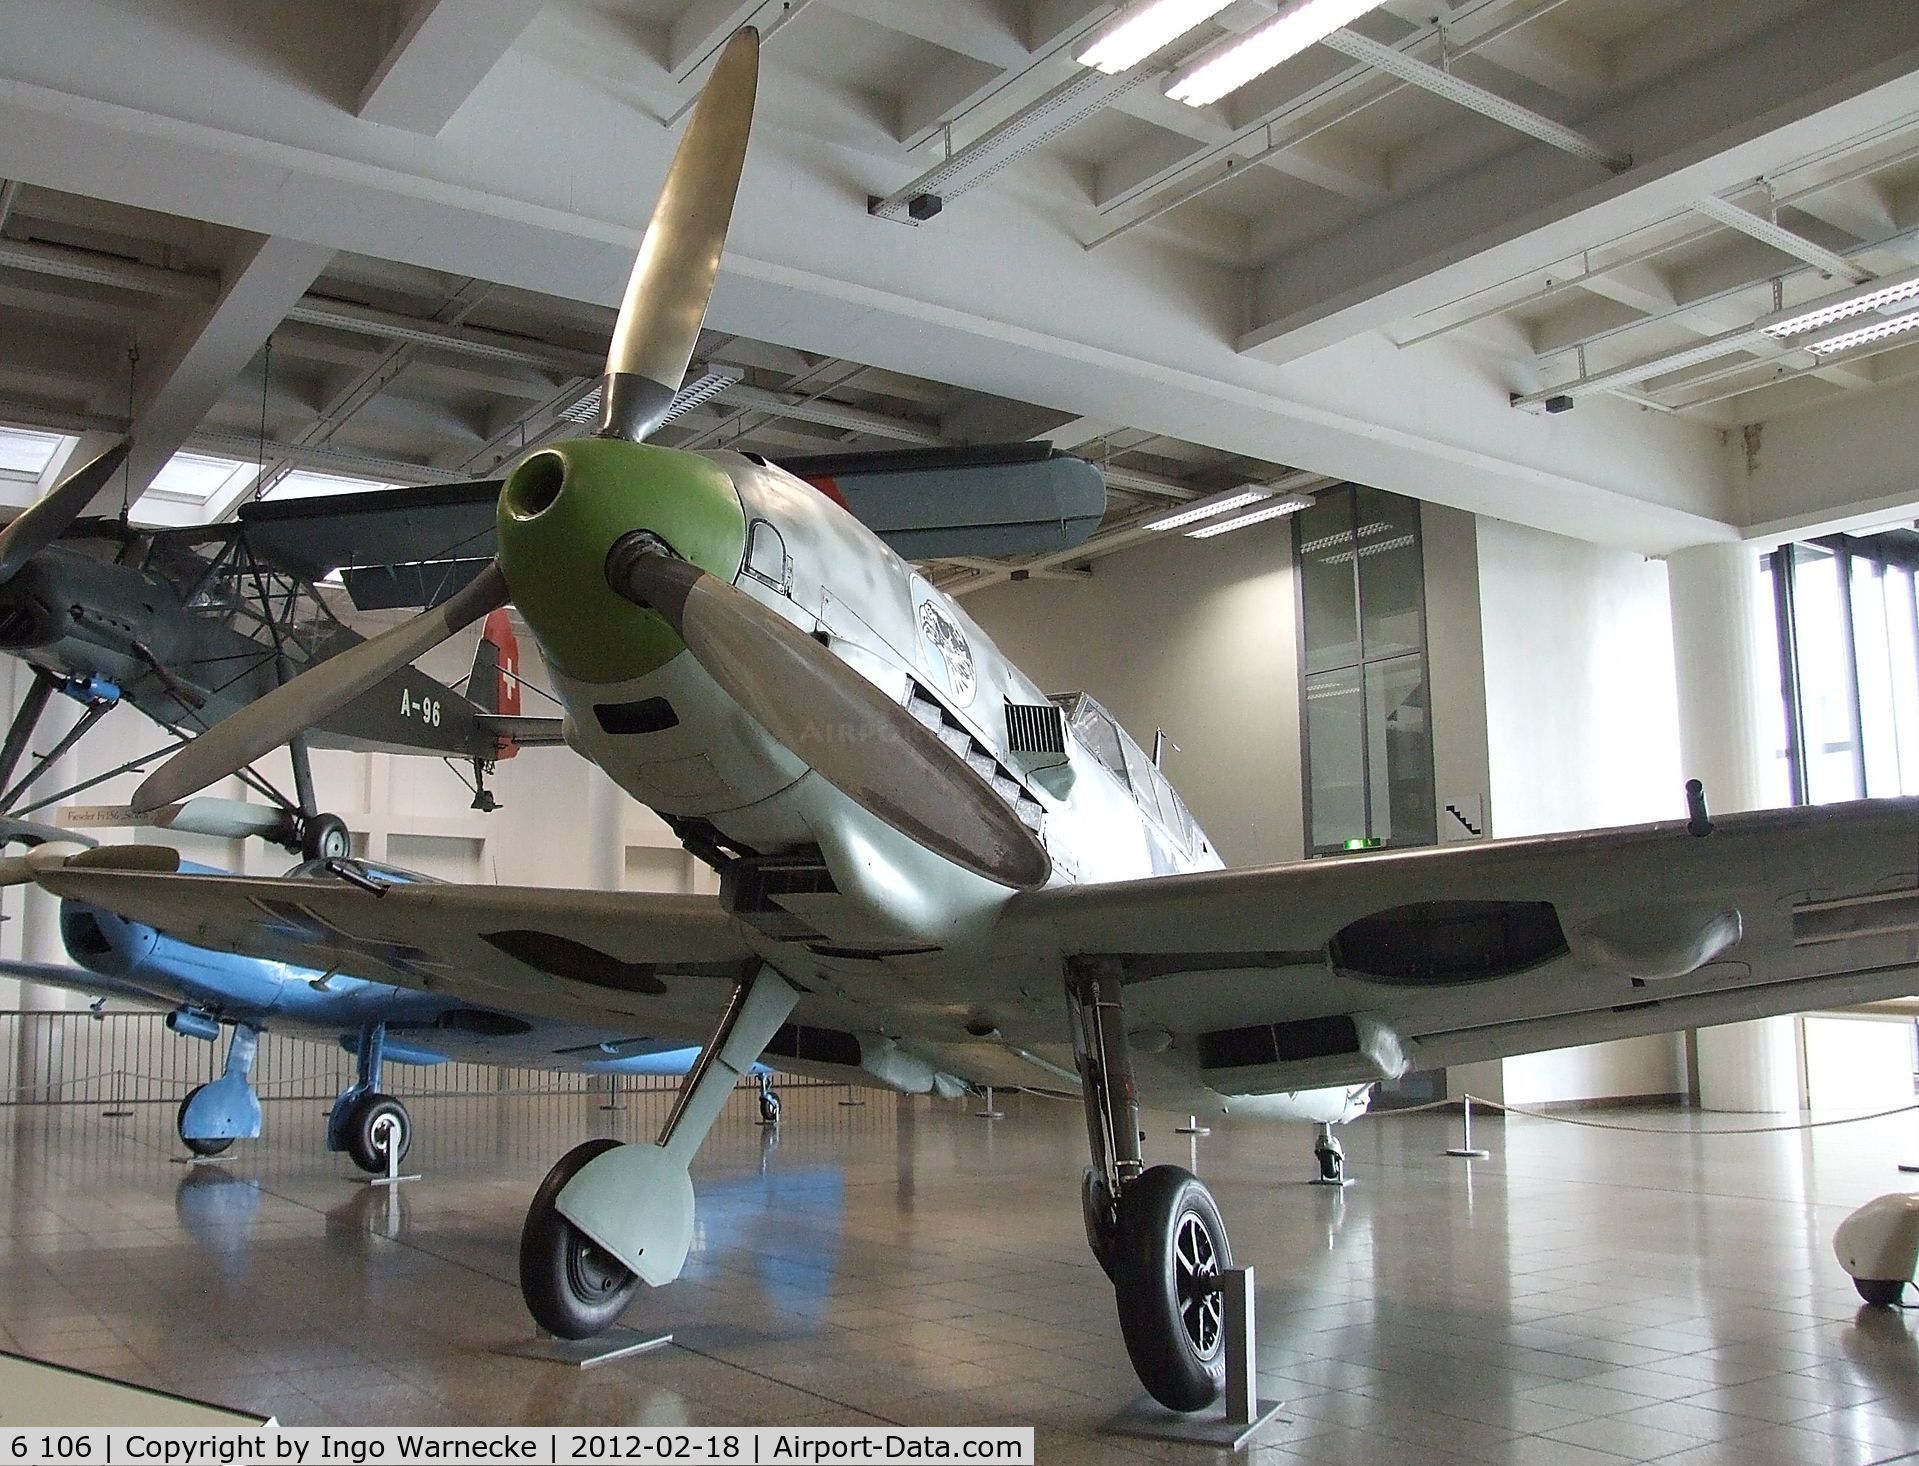 6 106, 1938 Messerschmitt Bf-109E-1 C/N 790, Messerschmitt Bf 109E-1, ex-Legion Condor, ex-Ejercito del Aire, displayed since 1973 in the markings of Werner Mölders' plane, at the Deutsches Museum, München (Munich)